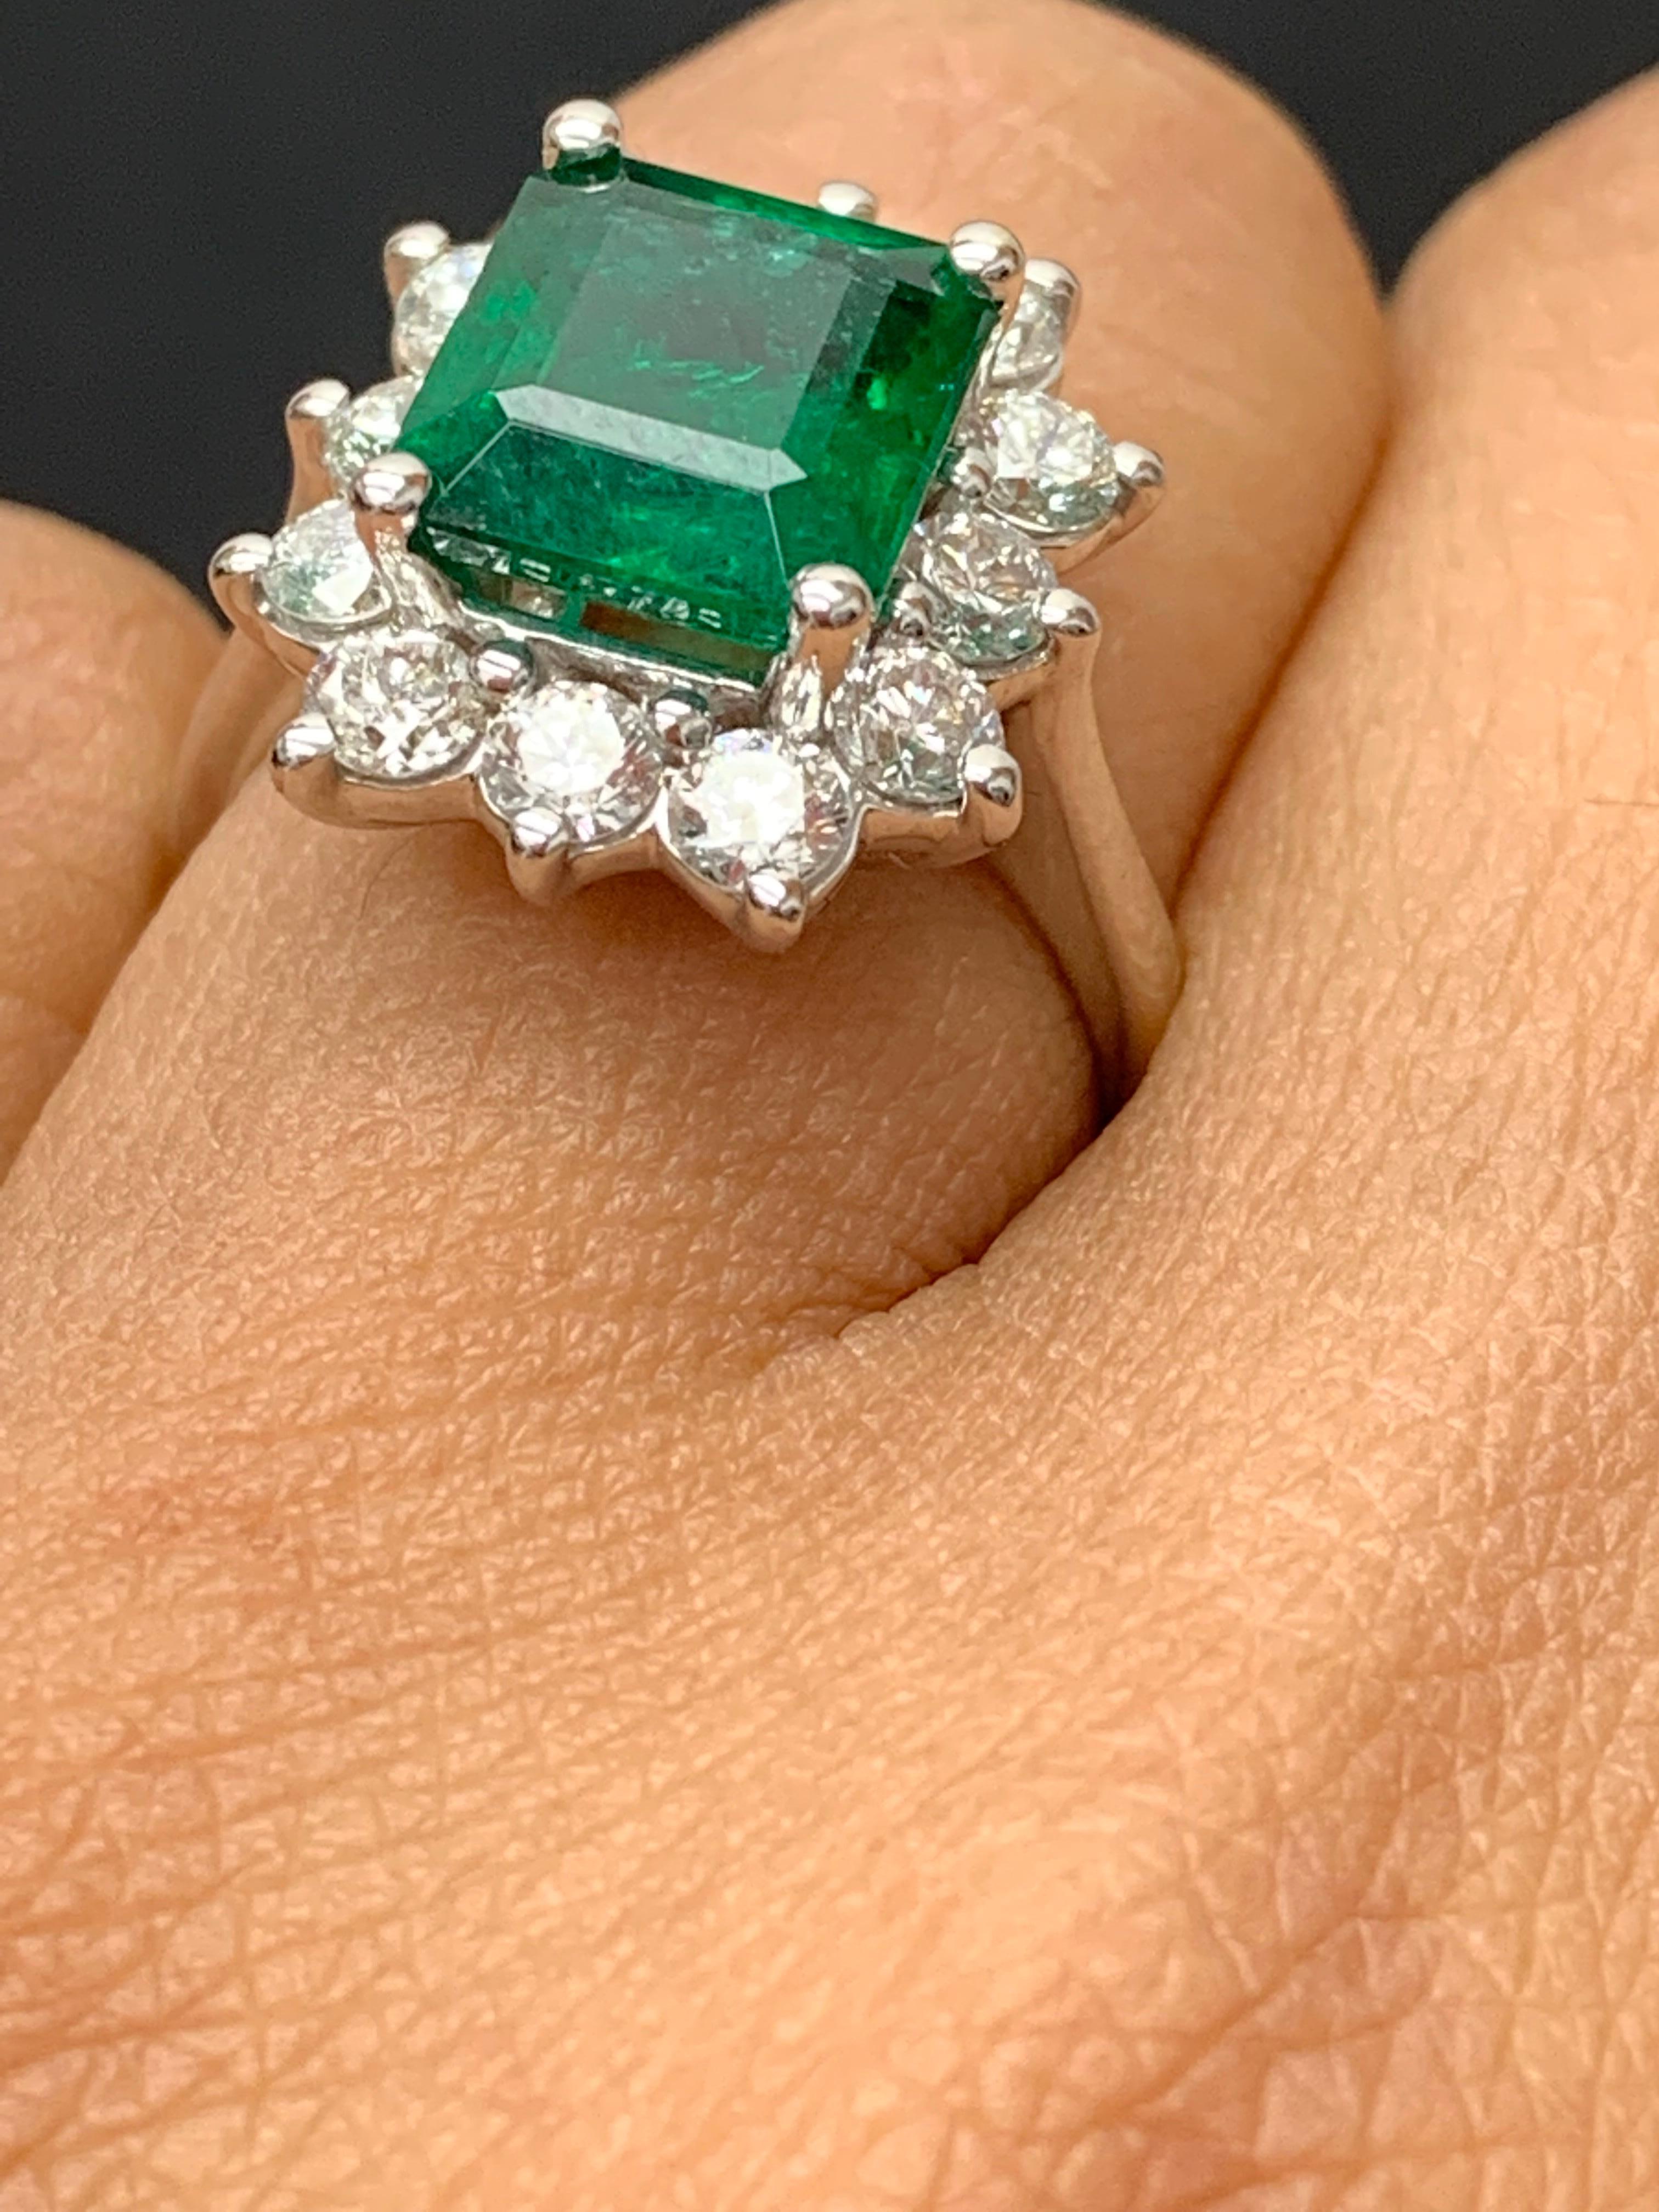 Certified 3.17 Carat Emerald Cut Emerald Diamond Ring in 14K White Gold For Sale 7